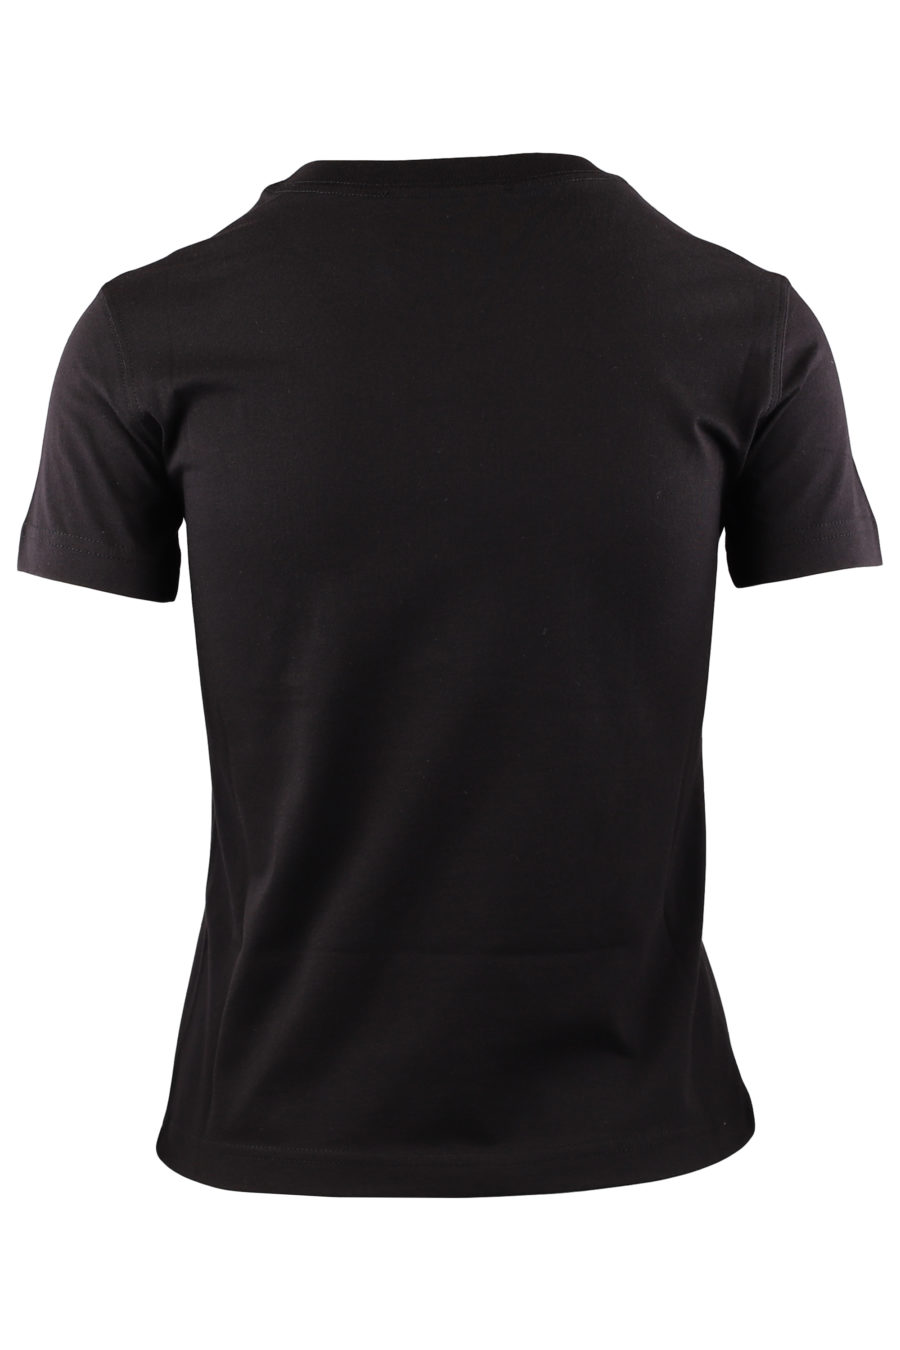 Schwarzes T-Shirt mit mehrfarbigem Logo - f6bc7b034cd89d2363ce91a07b7a01ba3b0d21c8 2